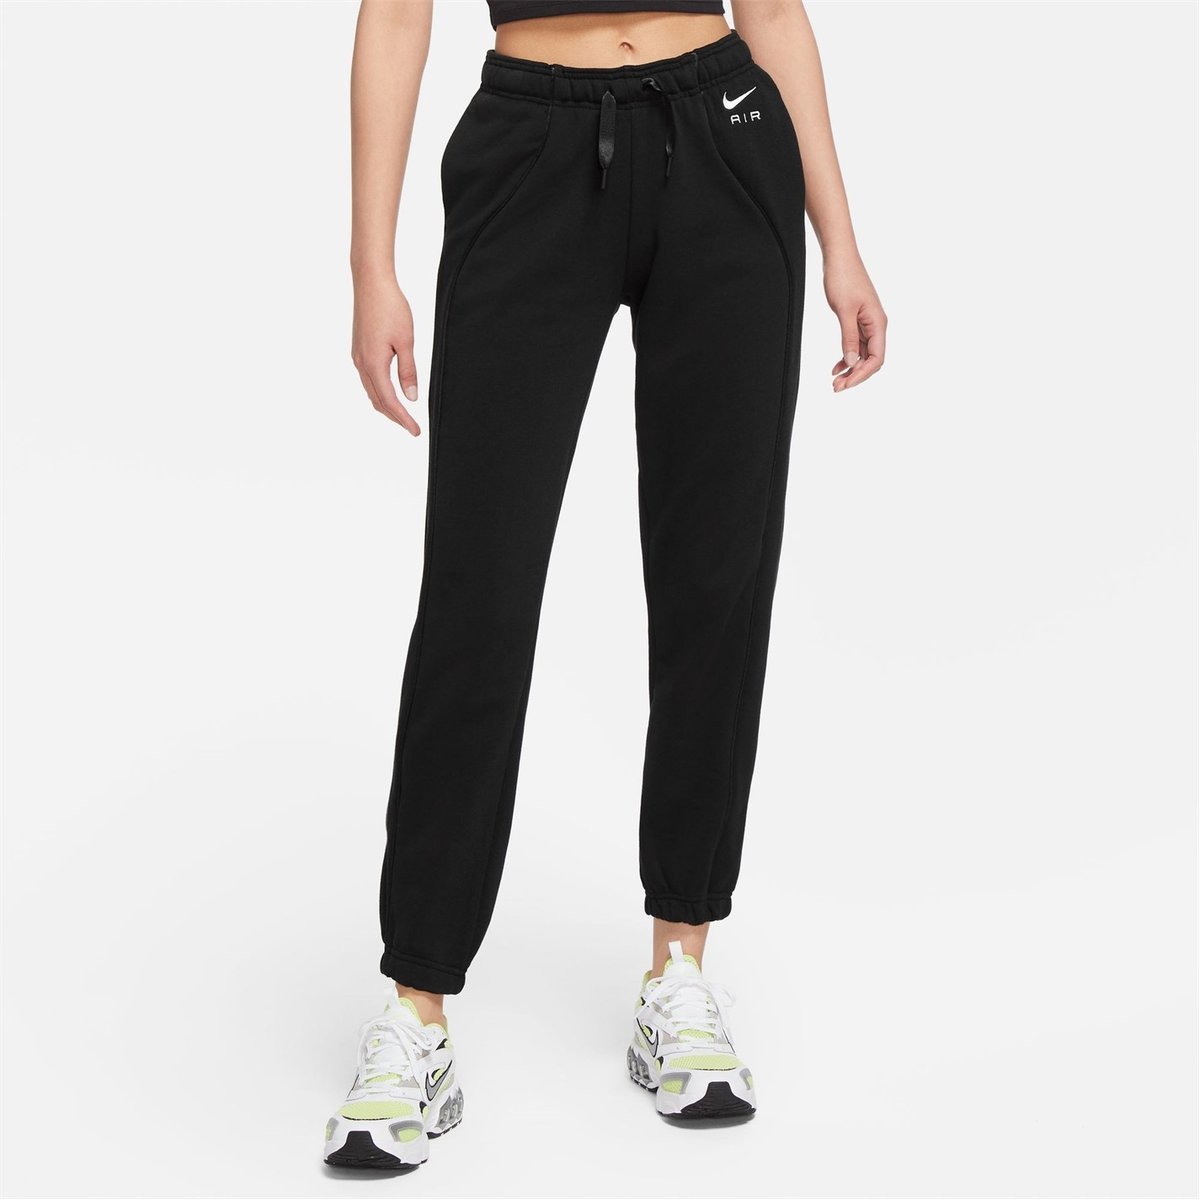 Nike Pants Womens Small Green Activewear Pant AJ3927-345